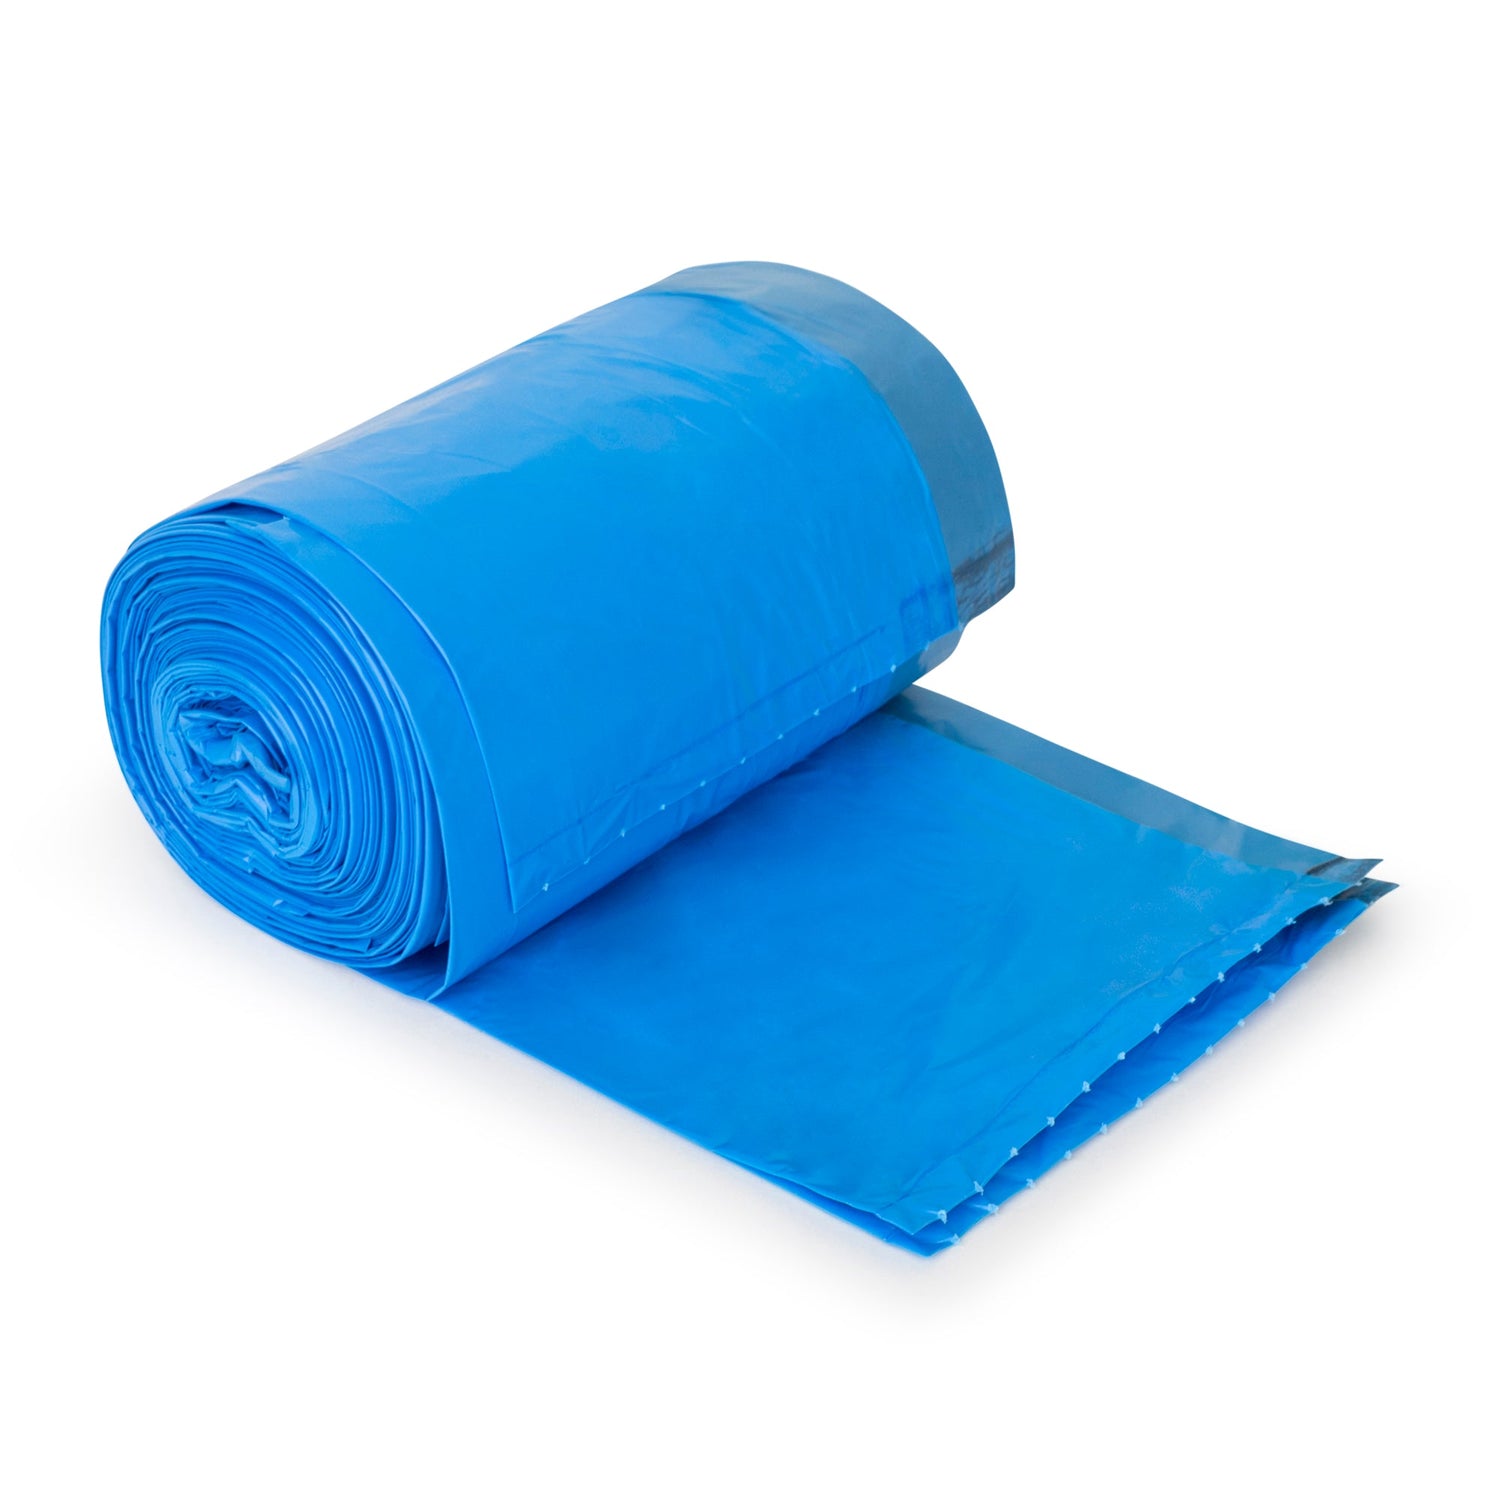 Sample of - 10 Gallon Simplehuman Compatible Blue Trash Bags Code K